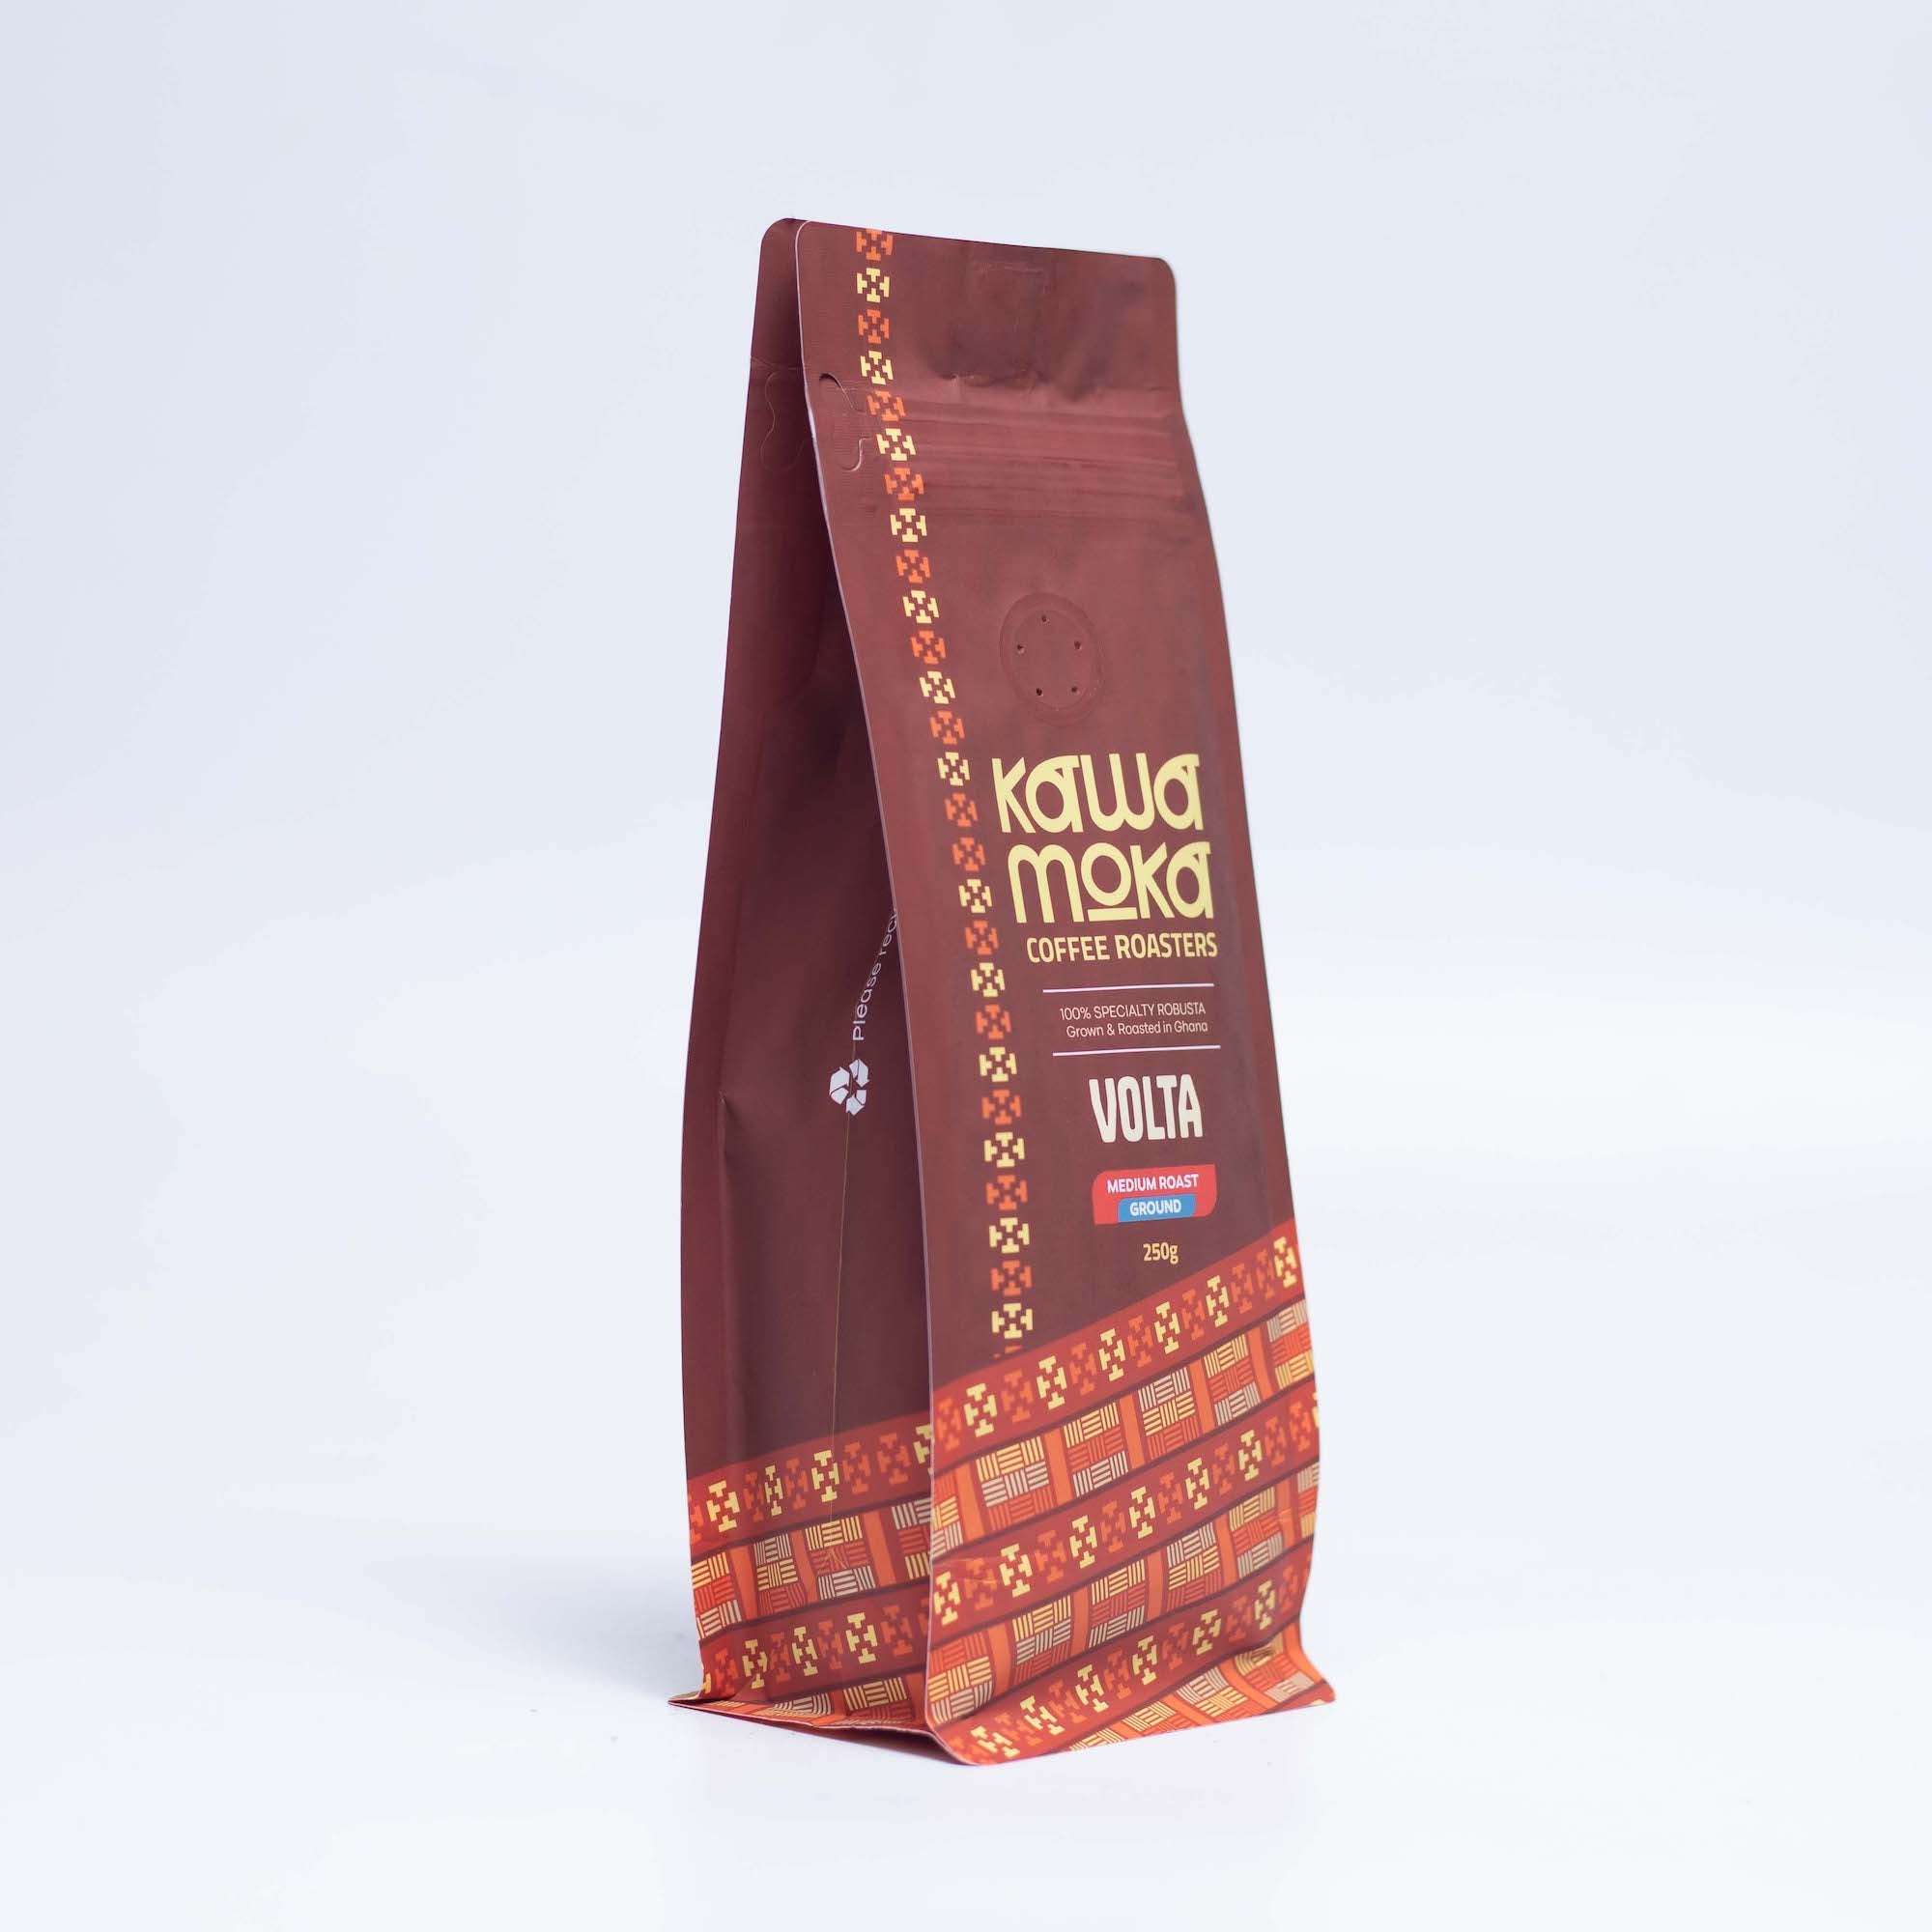 Volta Coffee - Medium Roast